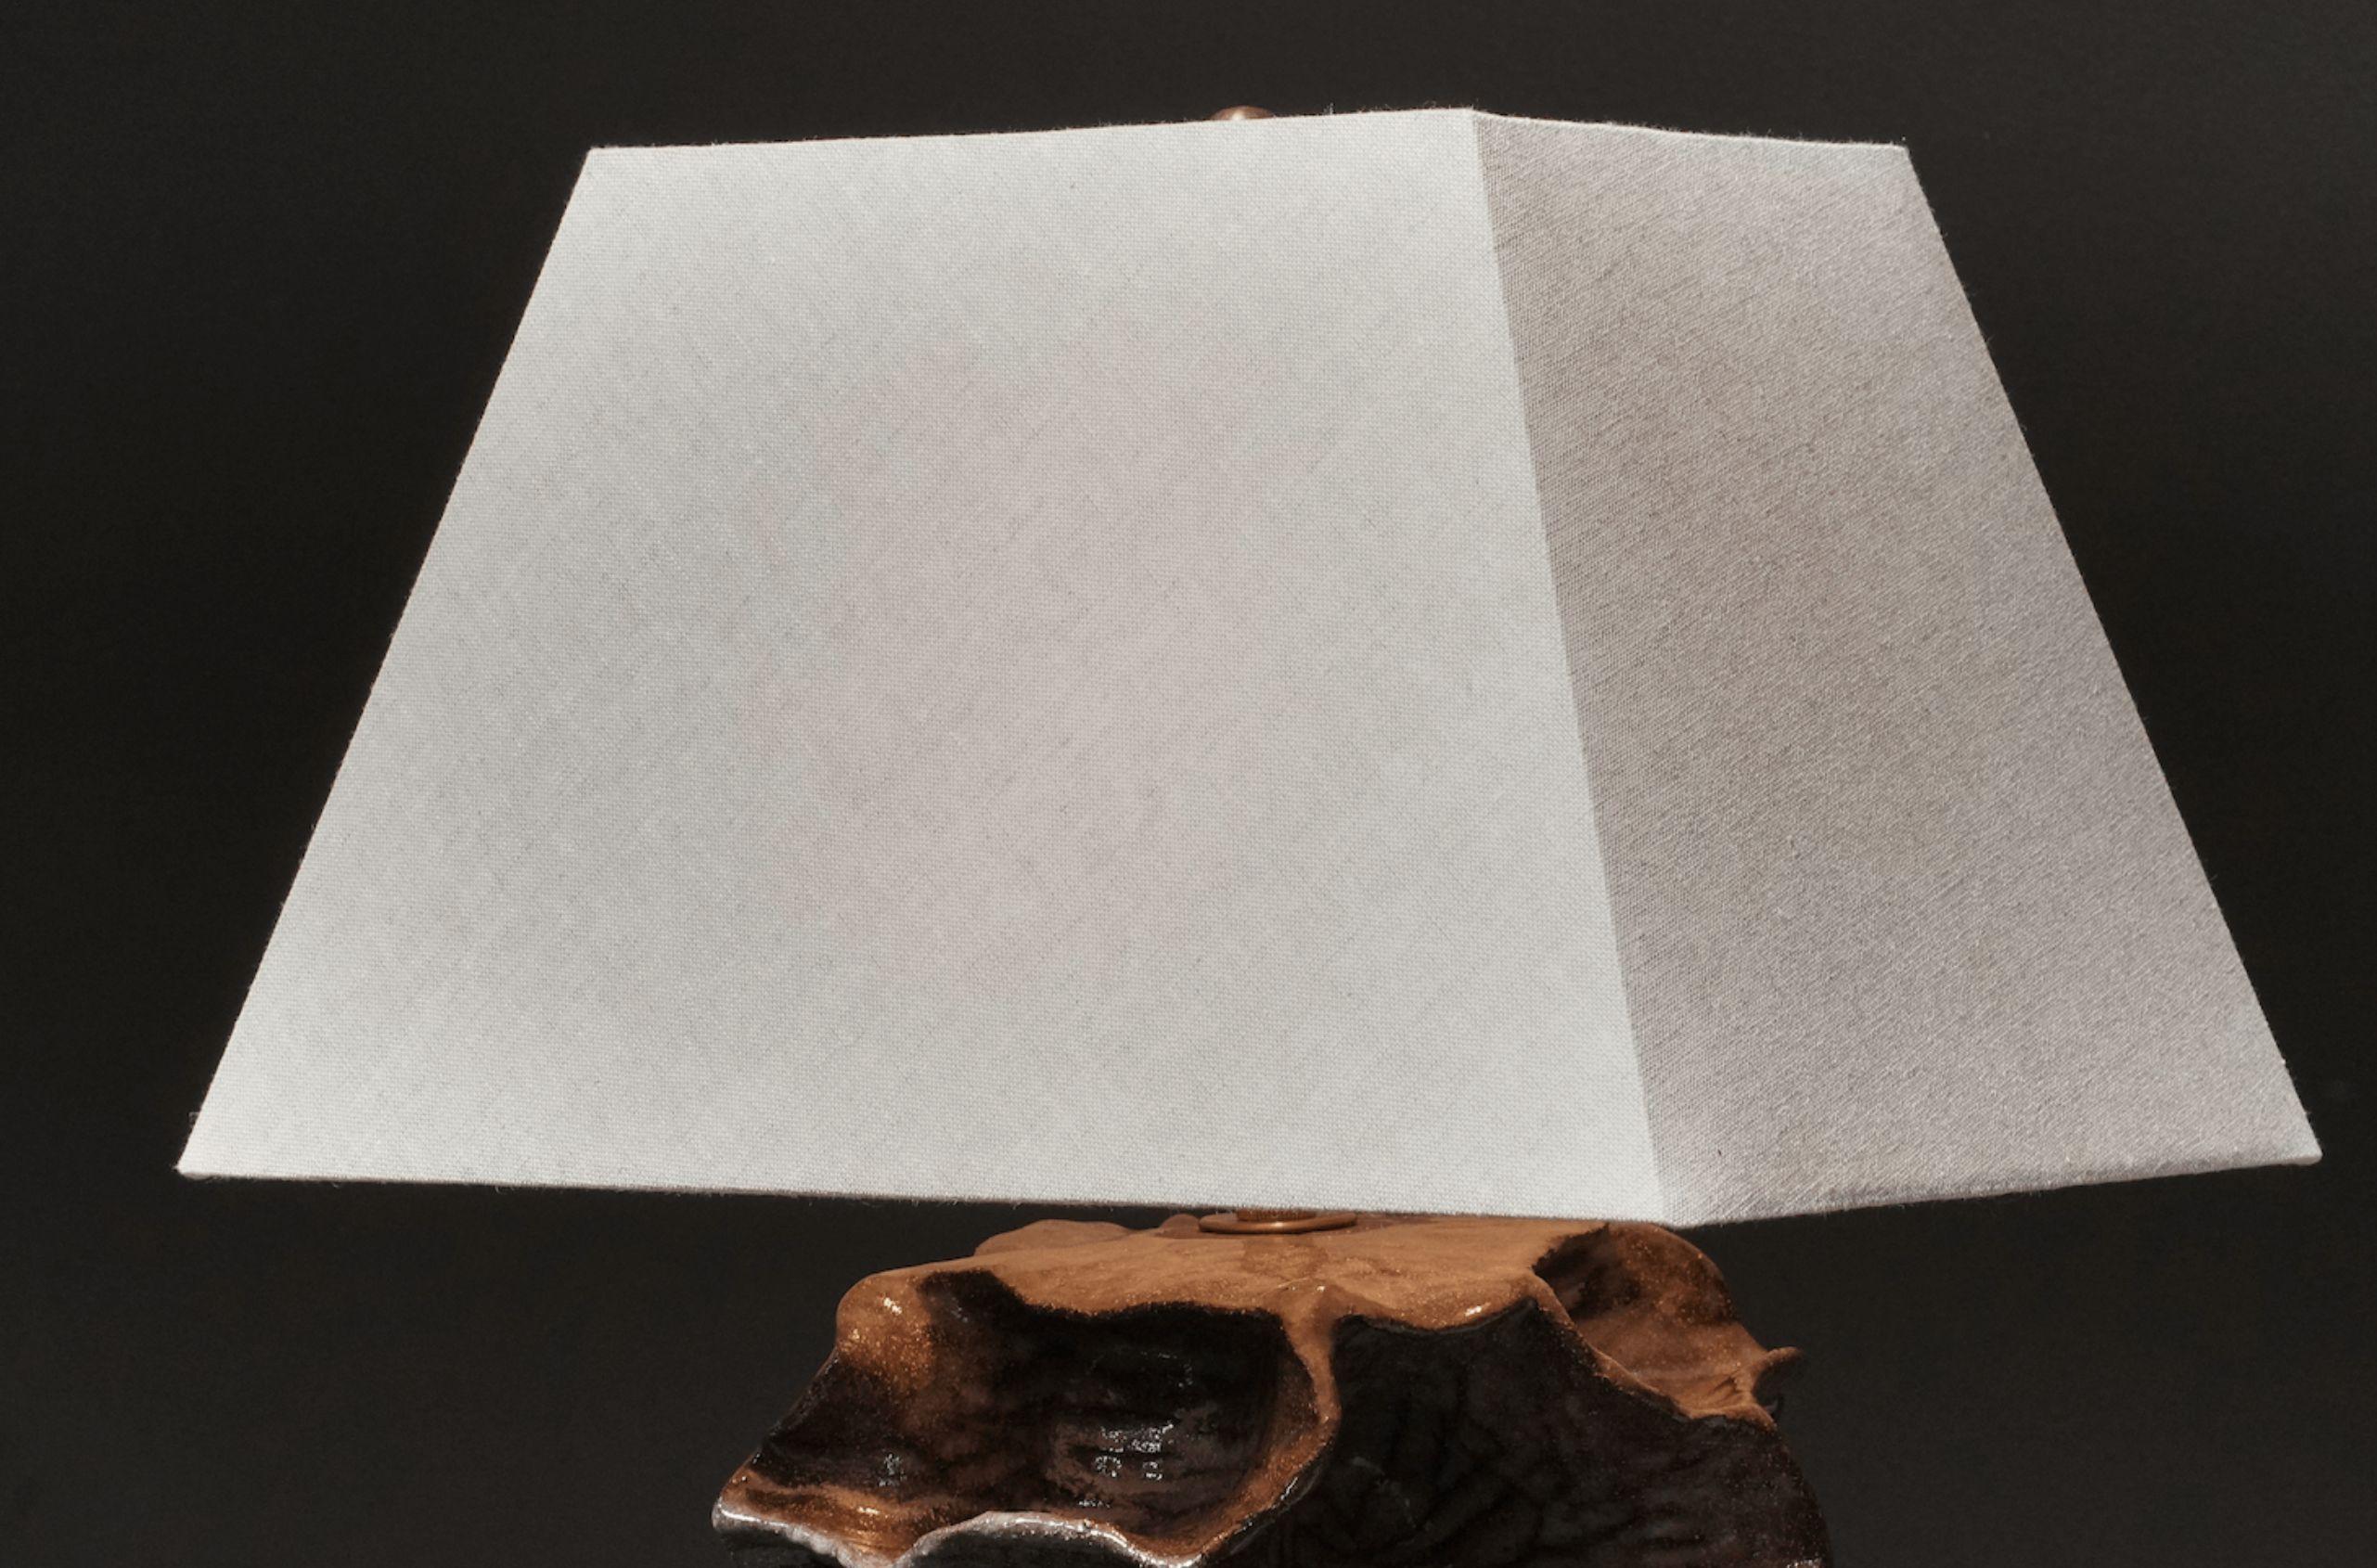  Porifera Ceramic Table Lamp, Peat In New Condition For Sale In Los Angeles, CA